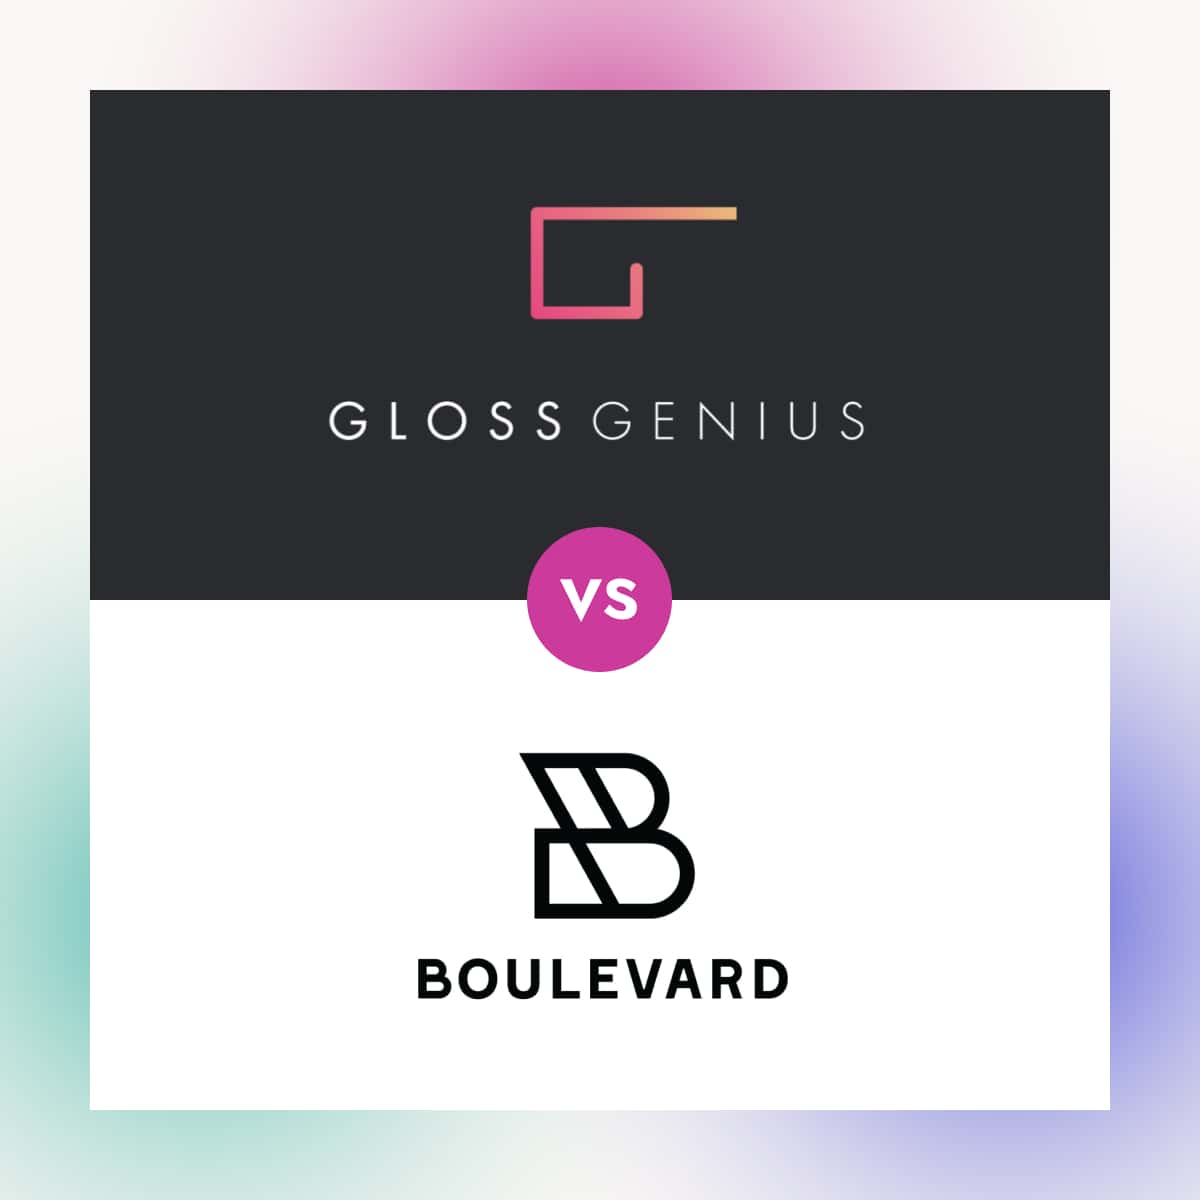 Glossgenius vs Boulevard featured image with logos